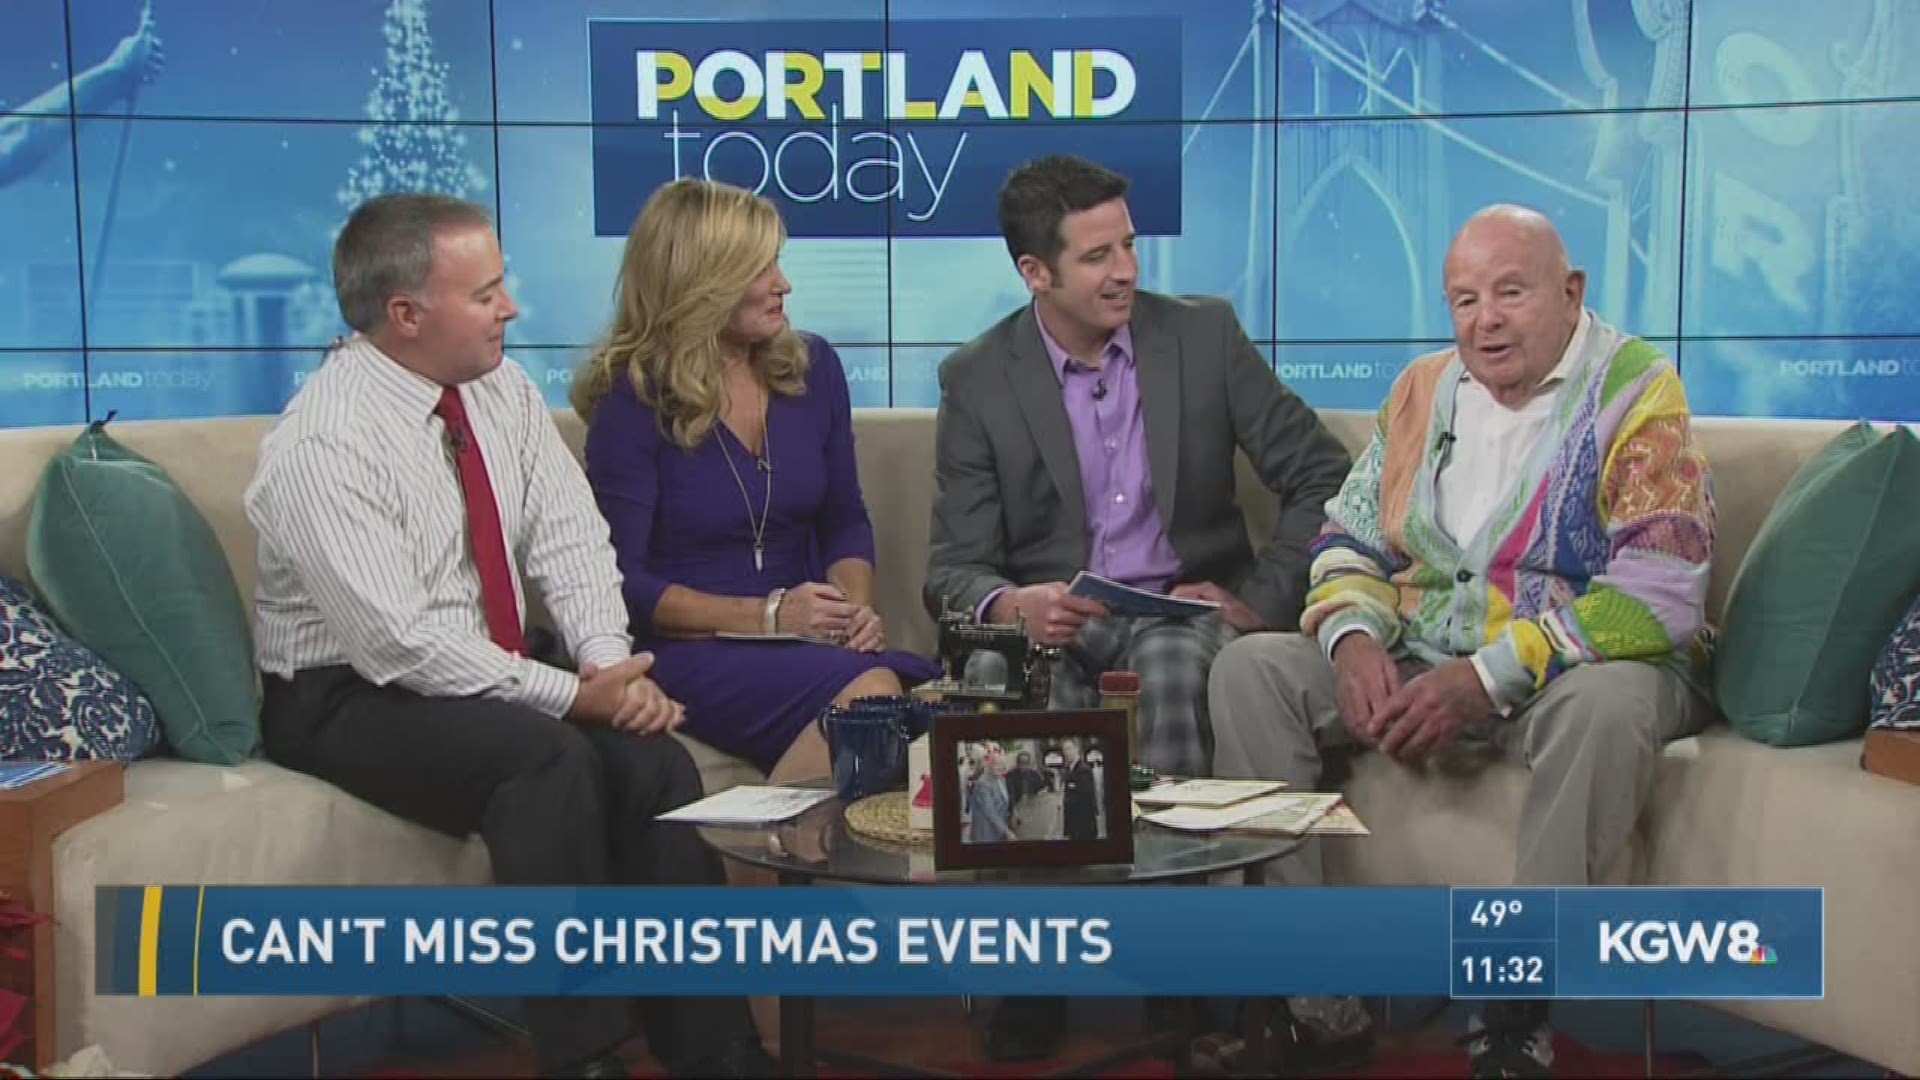 Gerry Frank's memories of Christmas in Portland